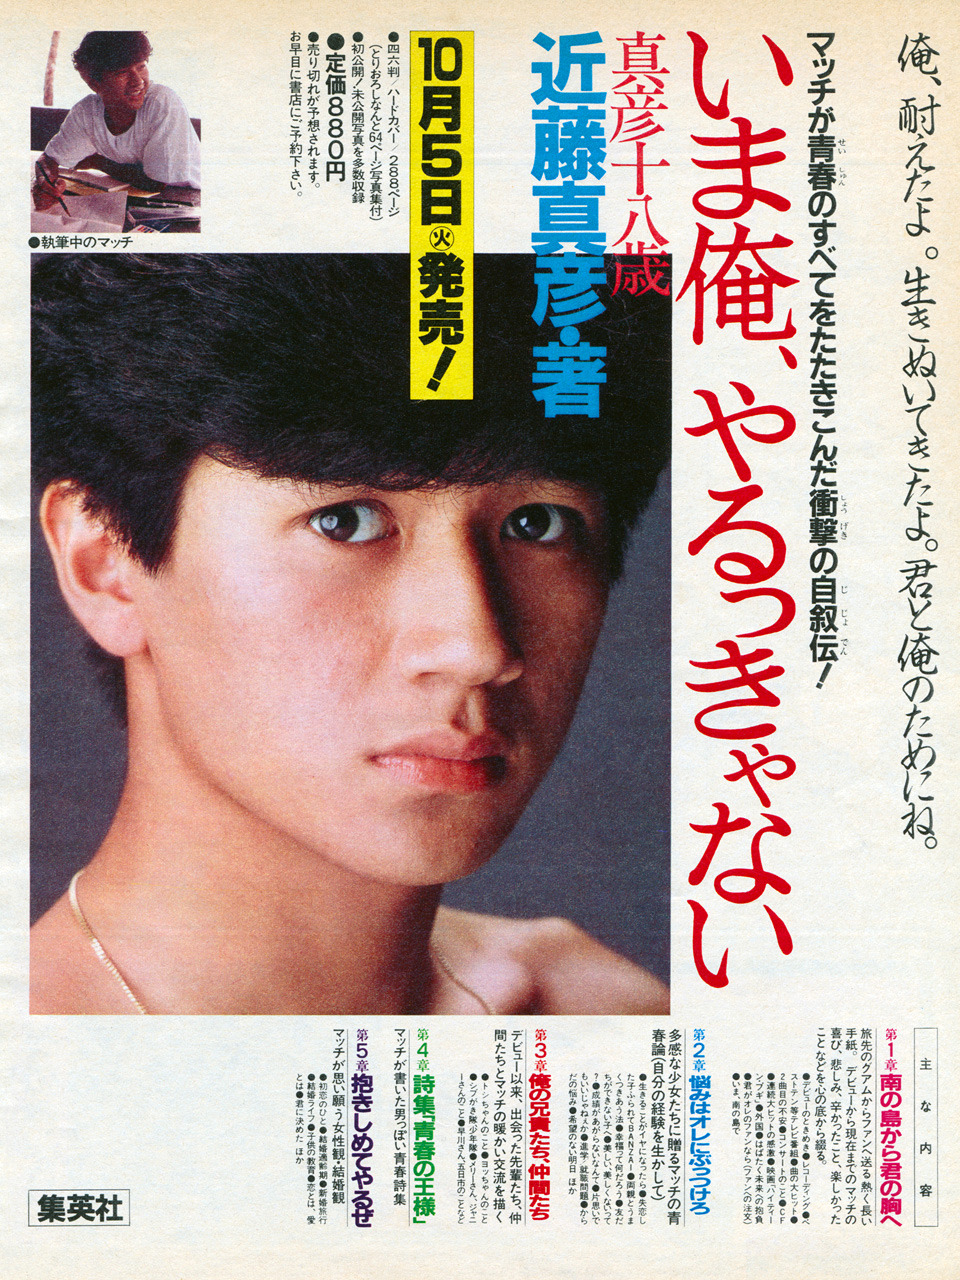 JAPAN3 — 近藤真彦 1982年